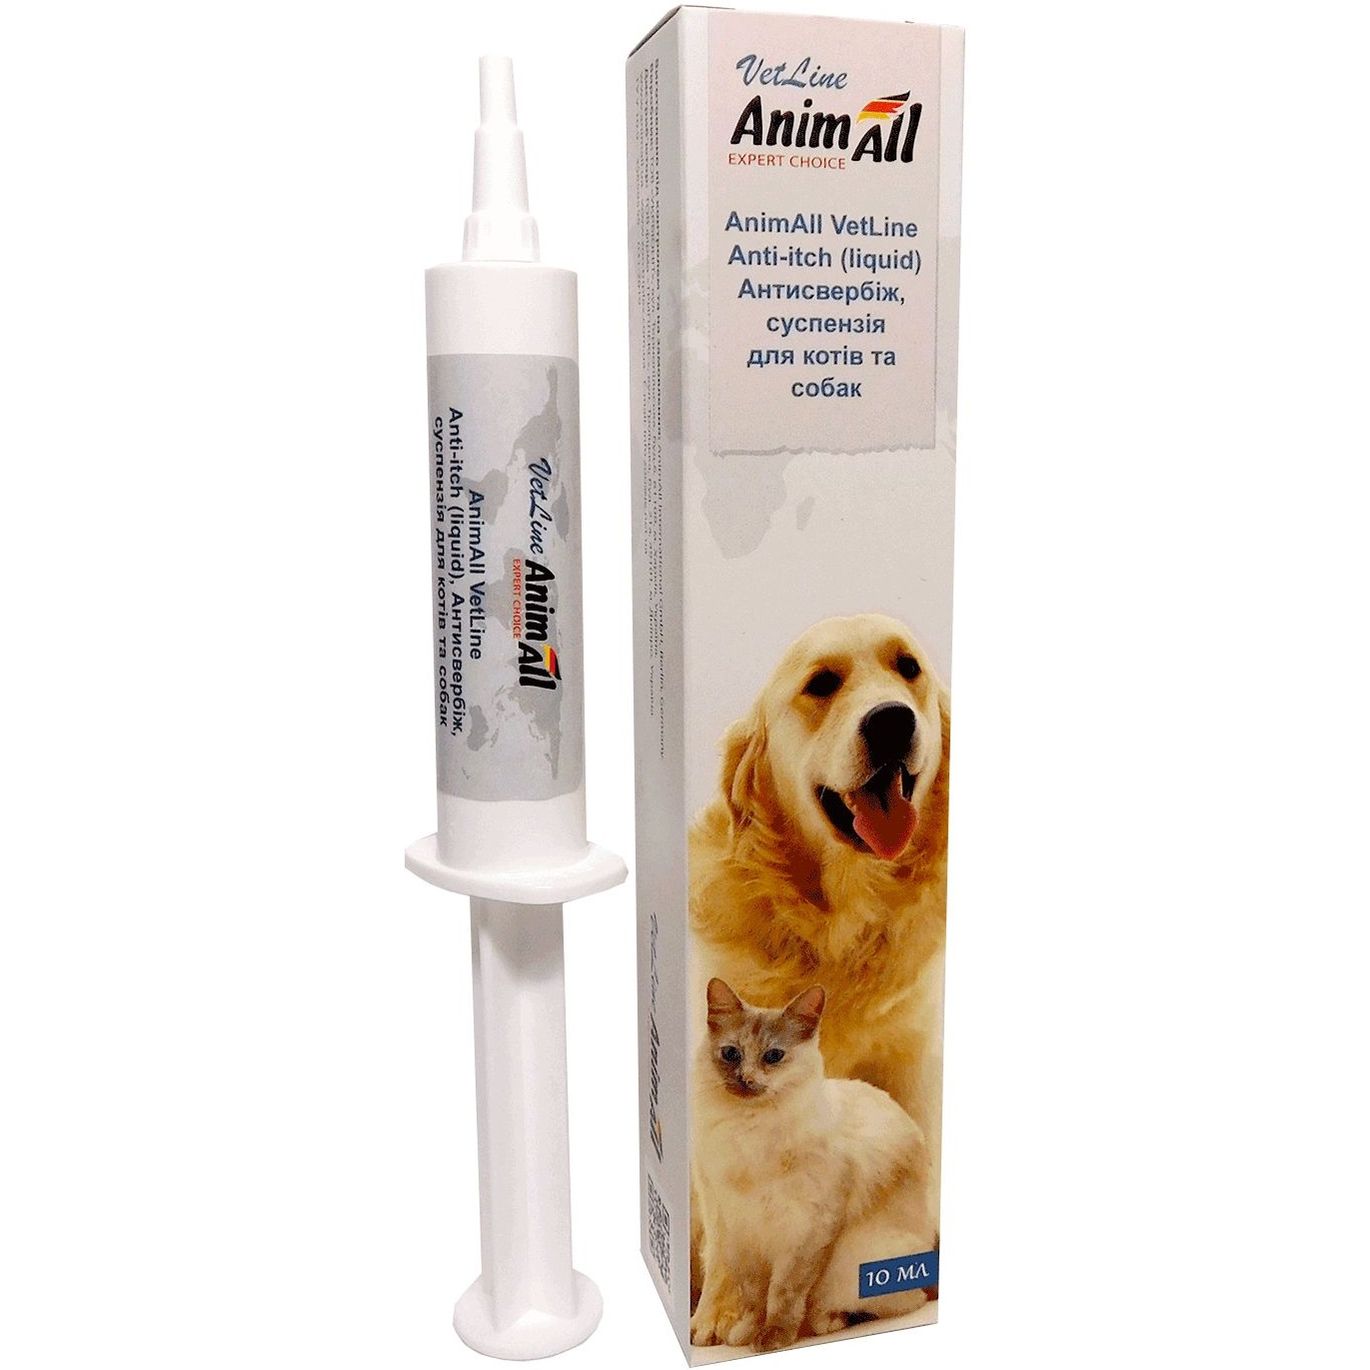 Суспензия AnimAll VetLine Антизуд для кошек и собак 10 мл - фото 1